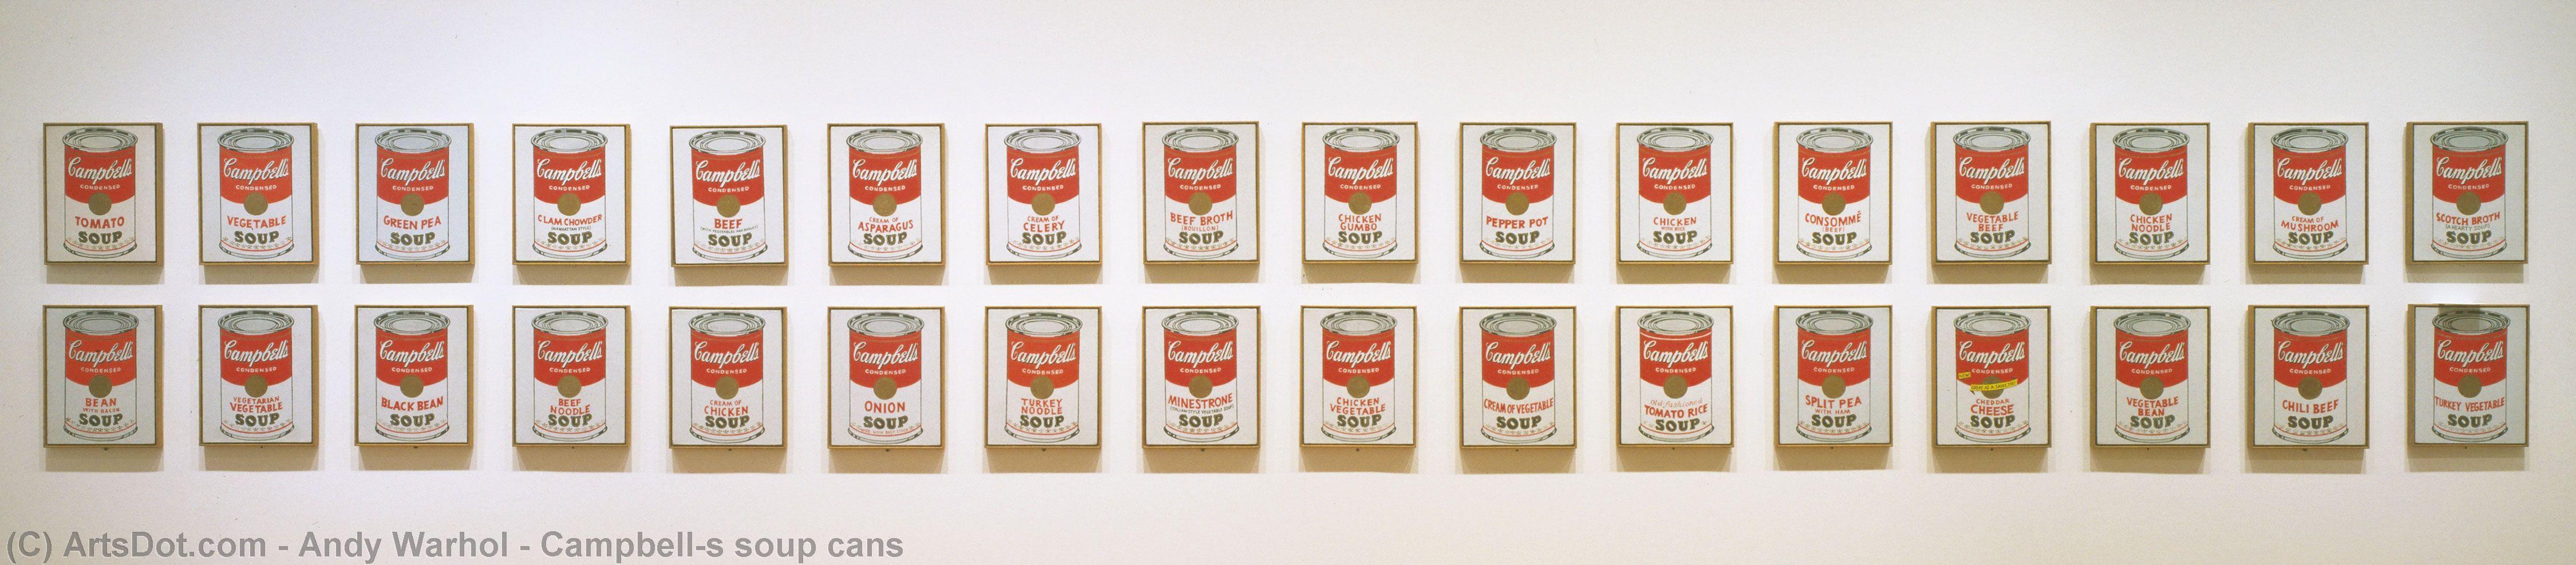 Wikoo.org - موسوعة الفنون الجميلة - اللوحة، العمل الفني Andy Warhol - Campbell's soup cans